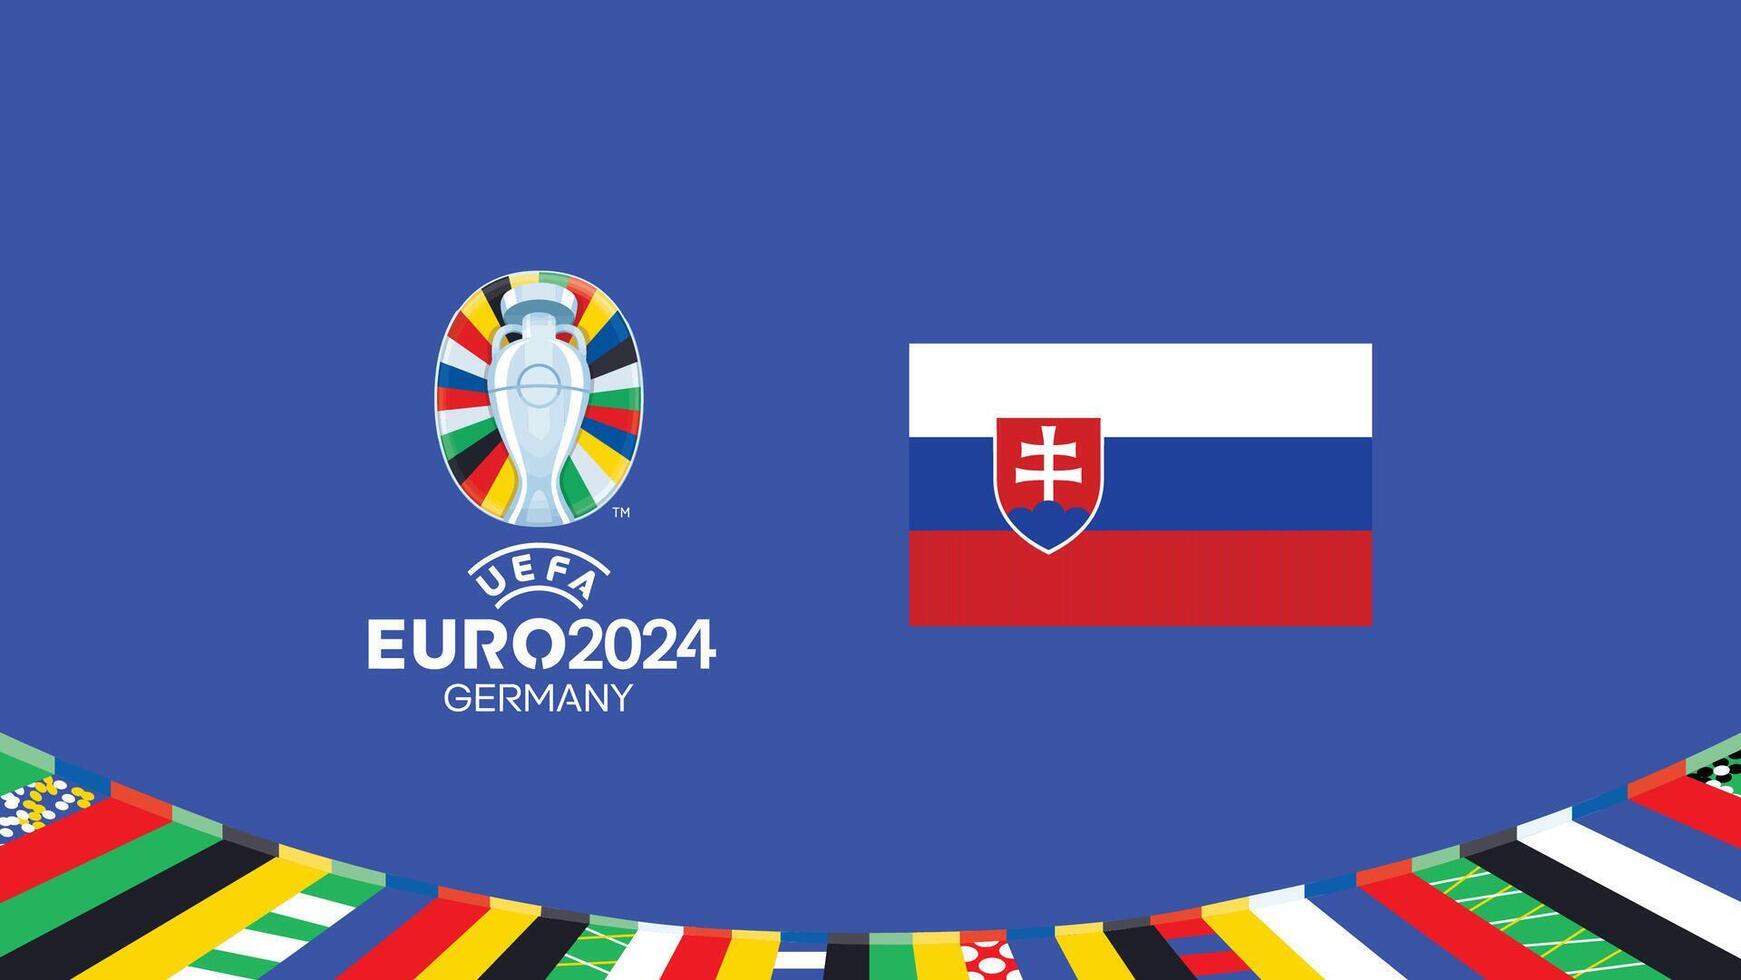 Euro 2024 Slovakia Flag Emblem Teams Design With Official Symbol Logo Abstract Countries European Football Illustration vector